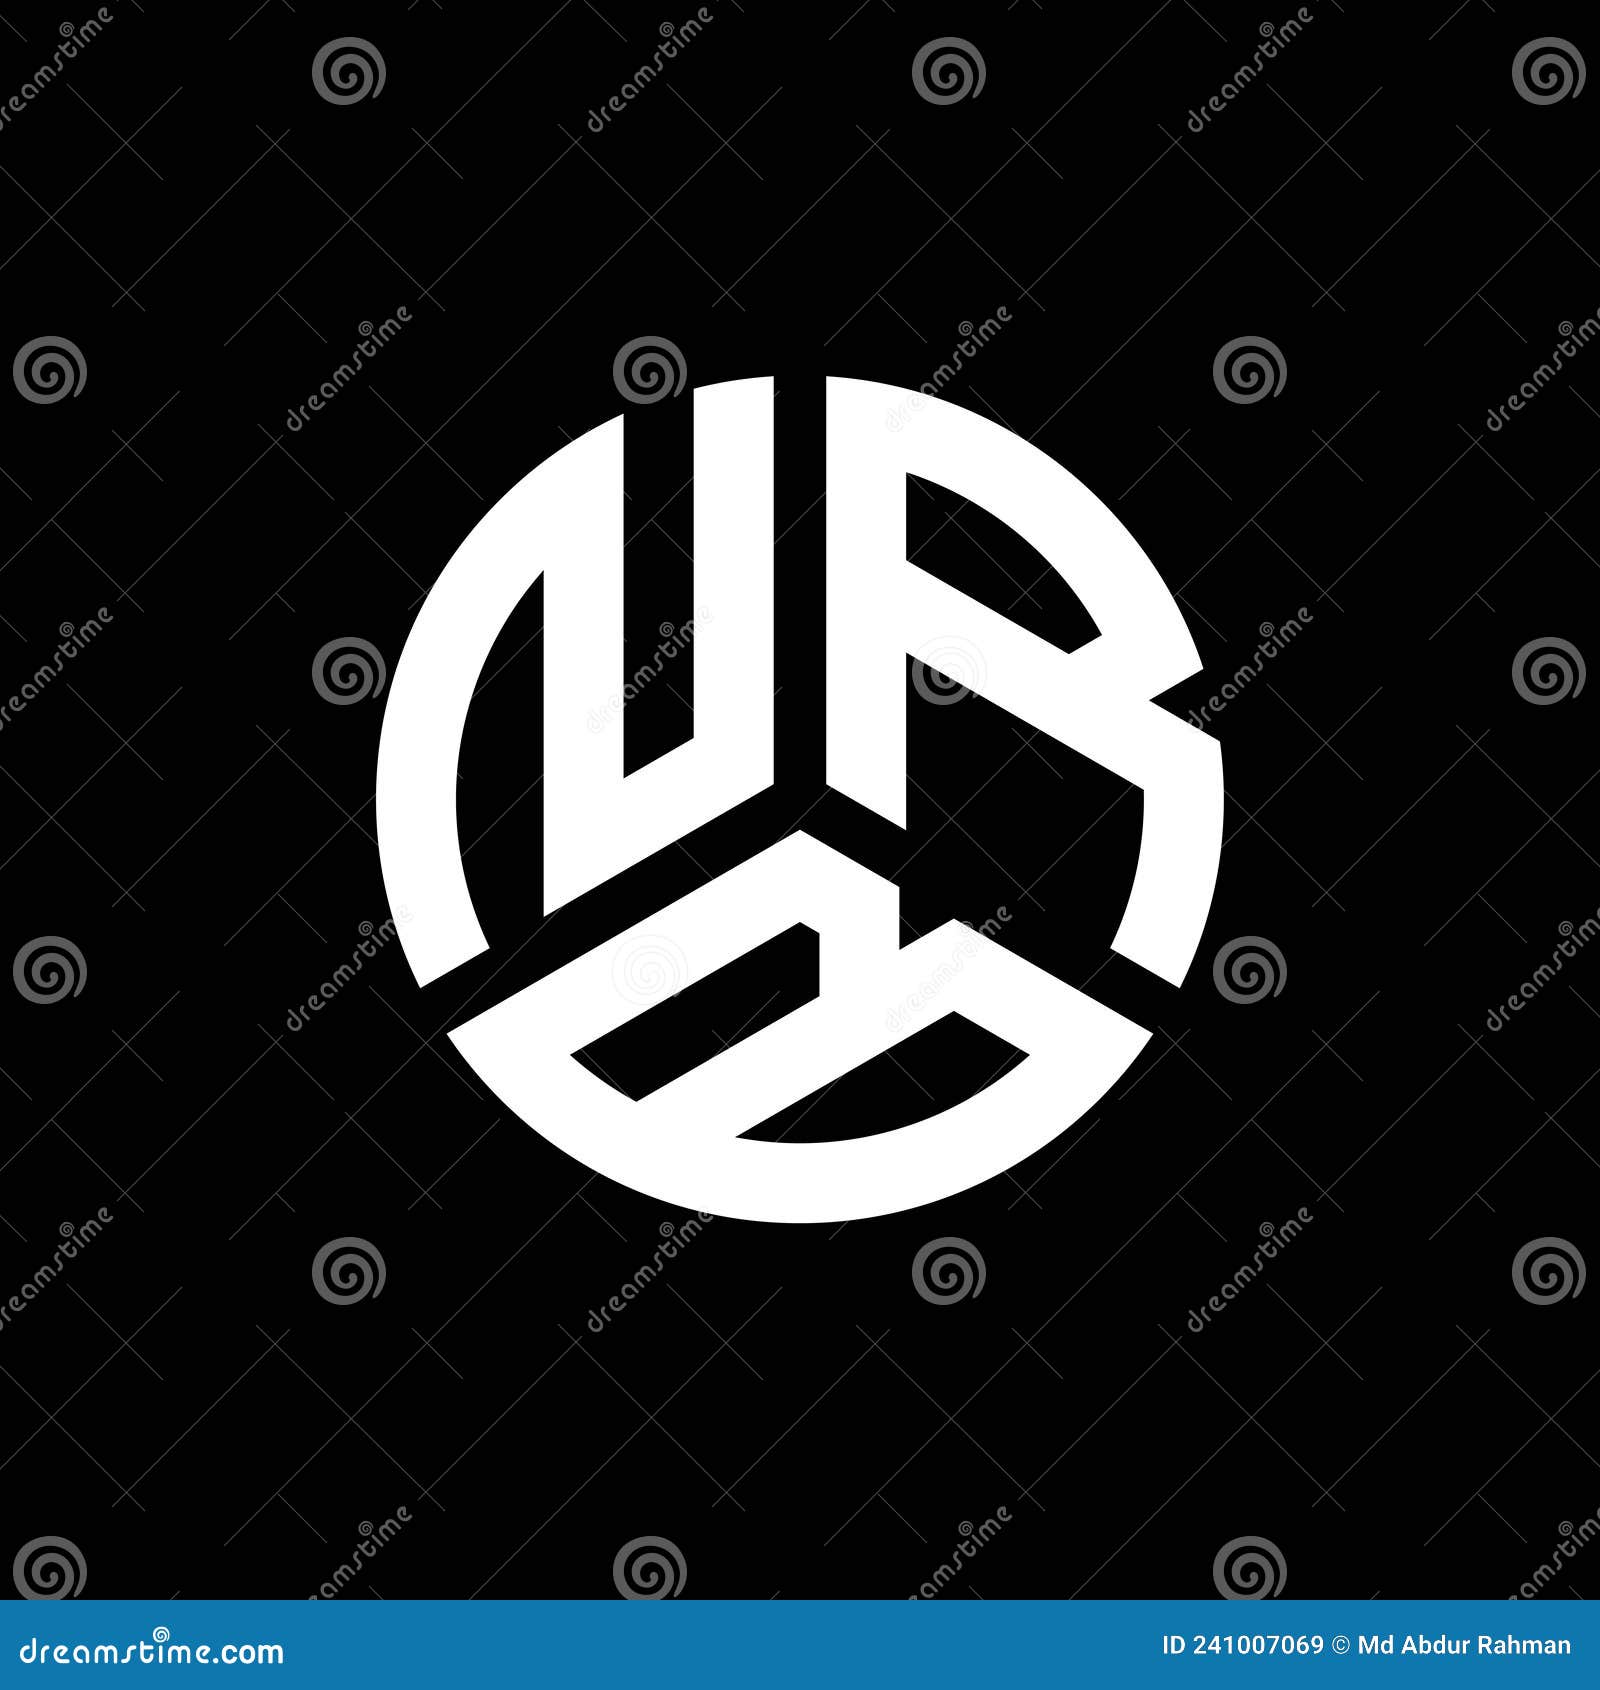 nrb letter logo  on black background. nrb creative initials letter logo concept. nrb letter 